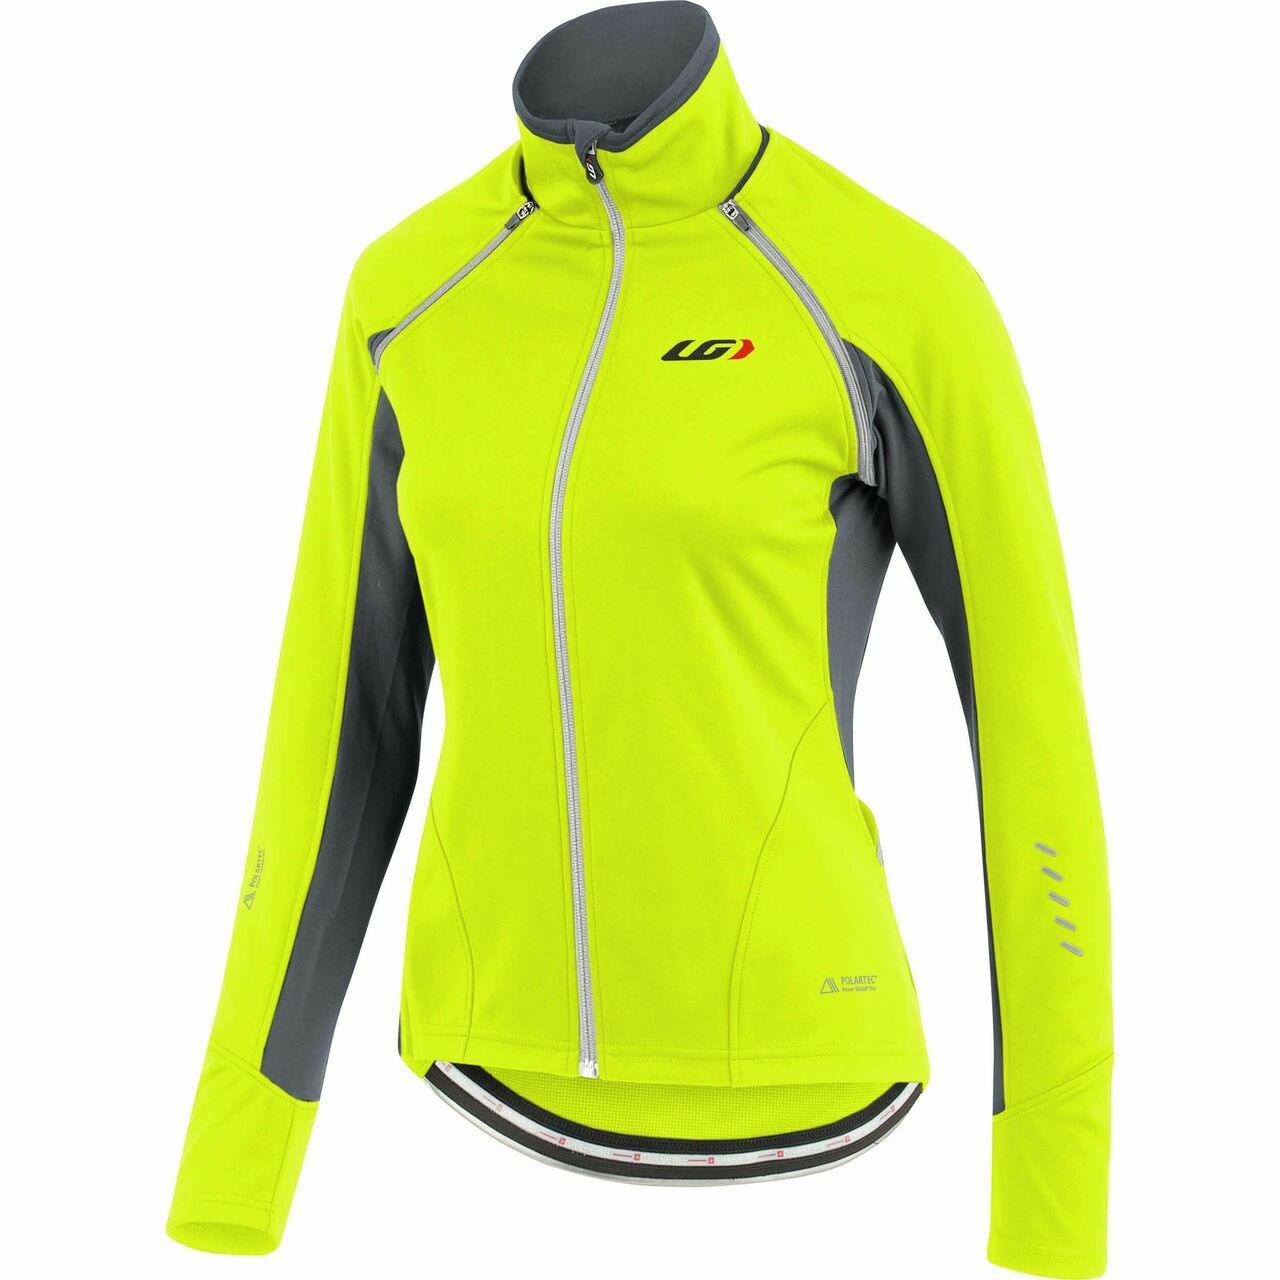 Louis Garneau Women's Spire Convertible Cycling Jacket, PINK:62269.preview.jpg / Xs